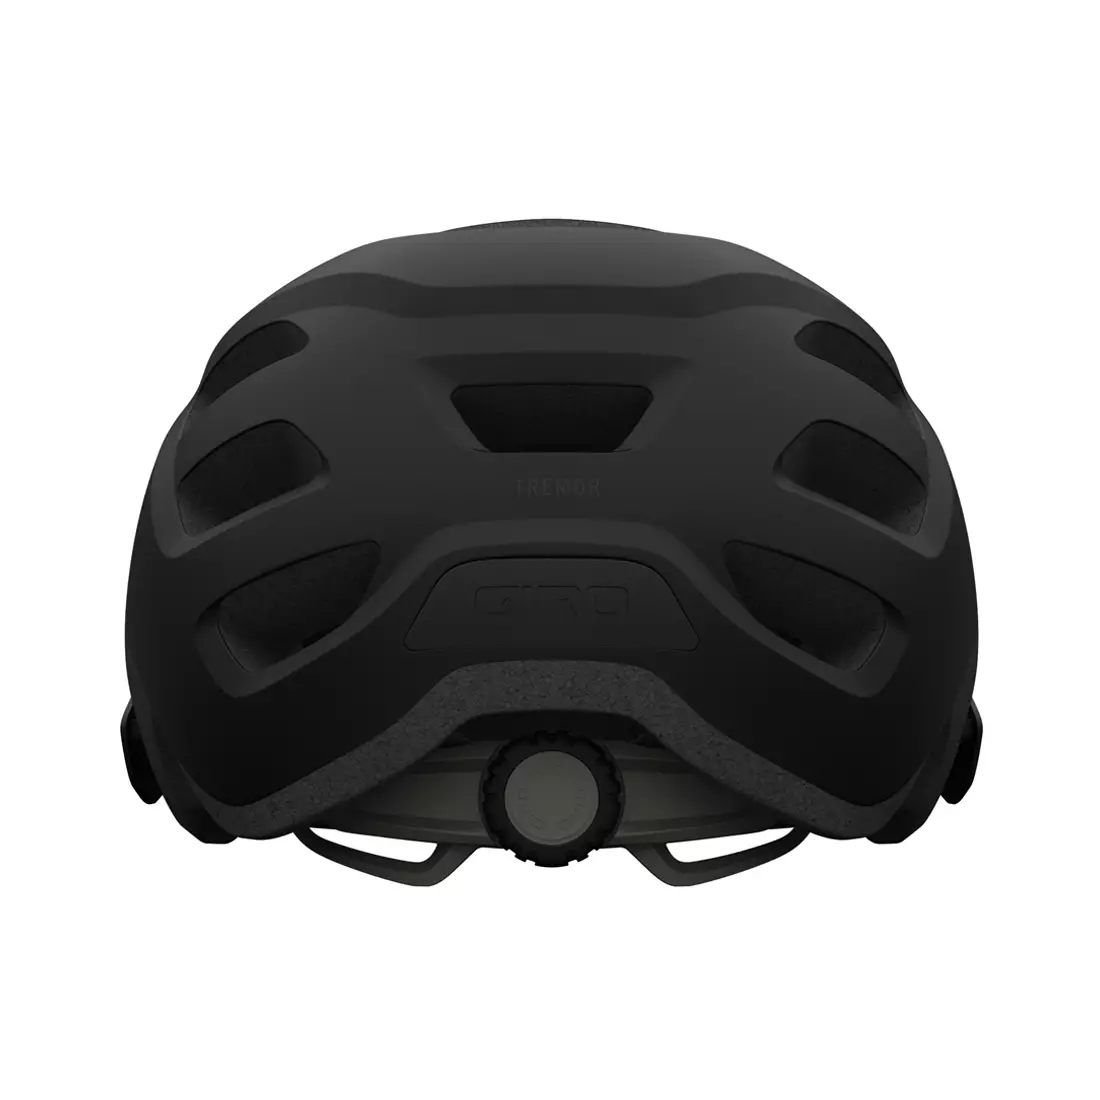 GIRO children's / junior bicycle helmet TREMOR CHILD INTEGRATED MIPS matte black GR-7129884